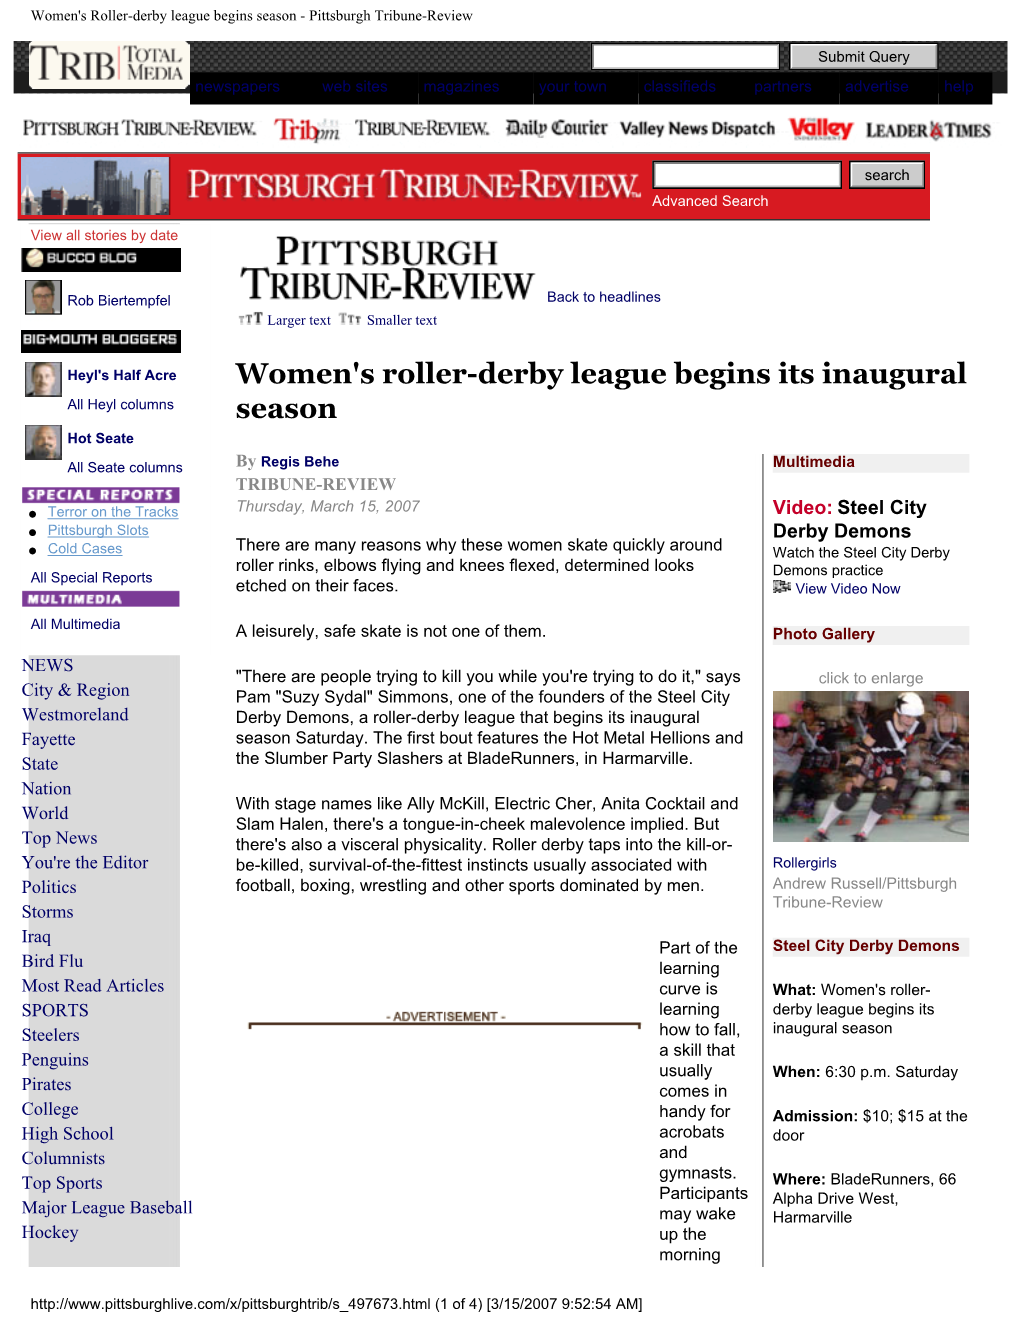 Women's Roller-Derby League Begins Season - Pittsburgh Tribune-Review